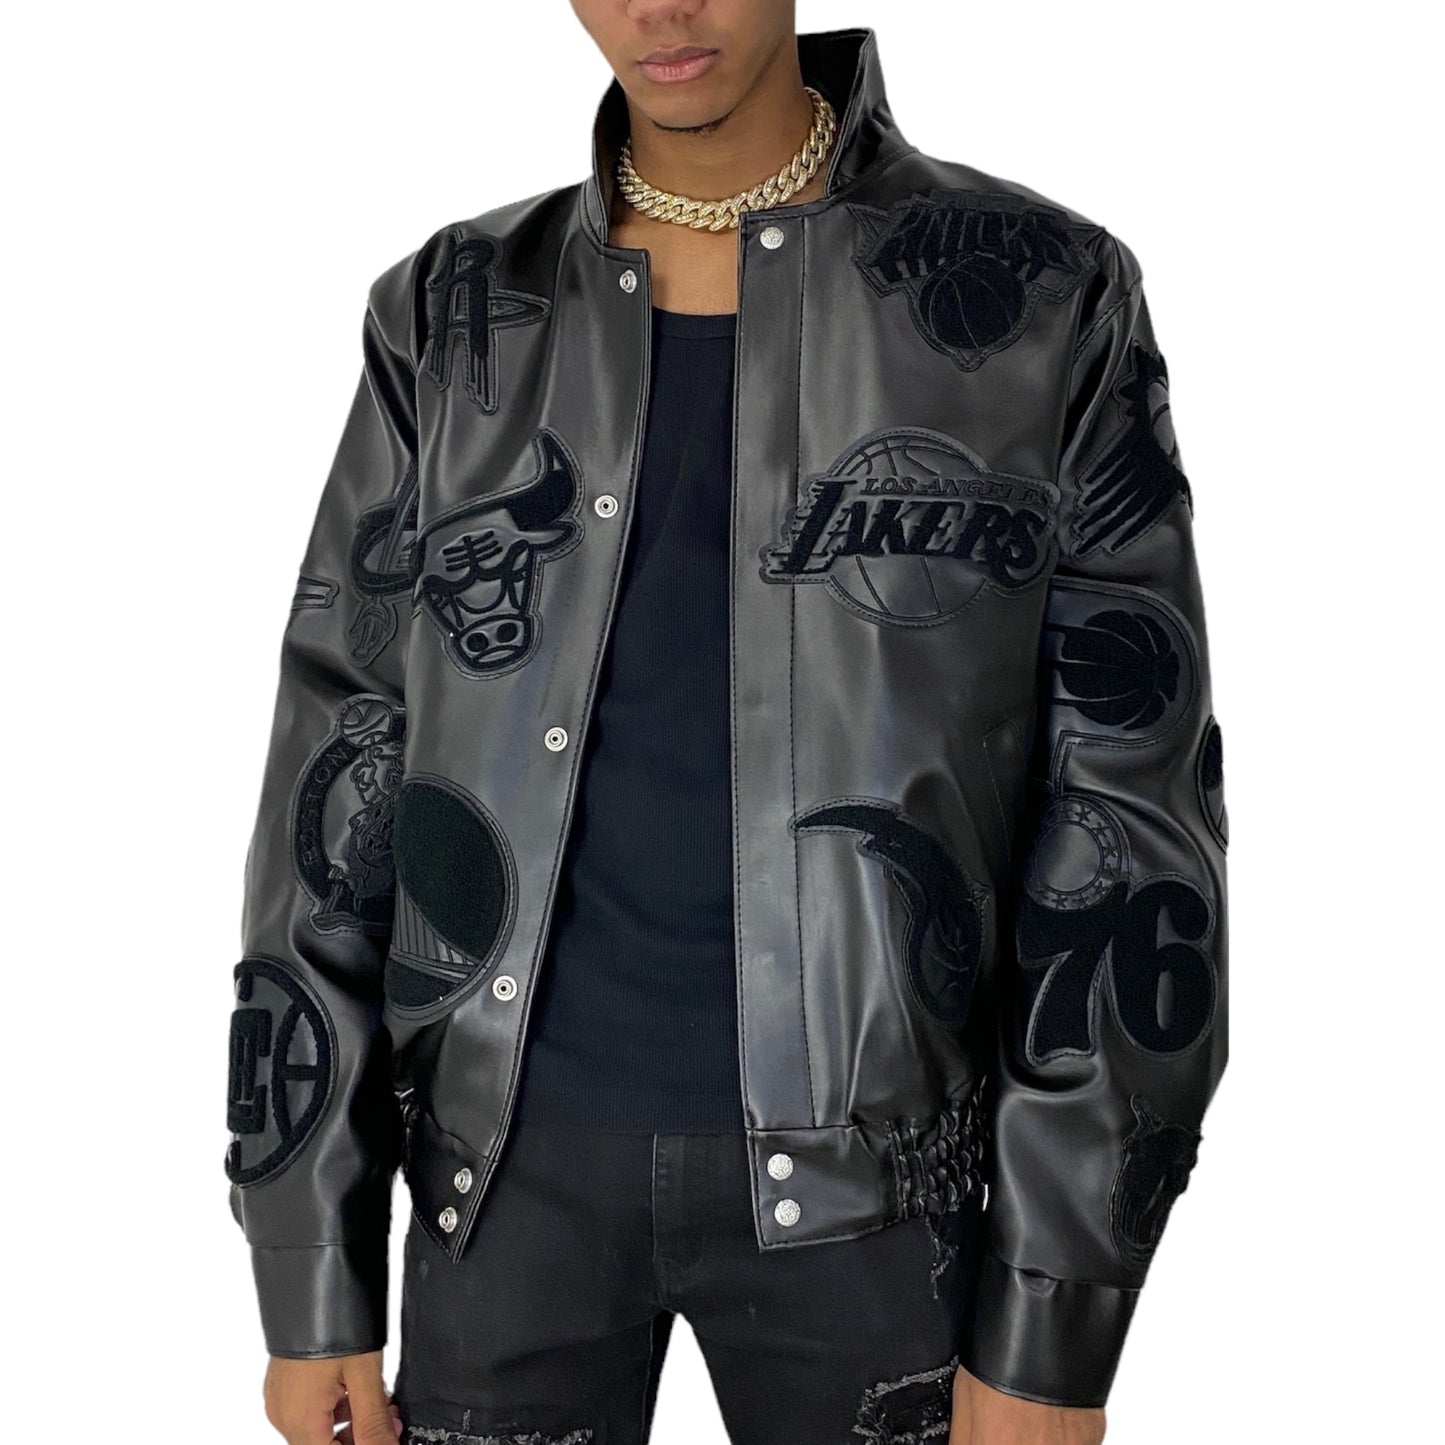 JEFF HAMILTON Nba Collage Faux Leather Jacket - Black